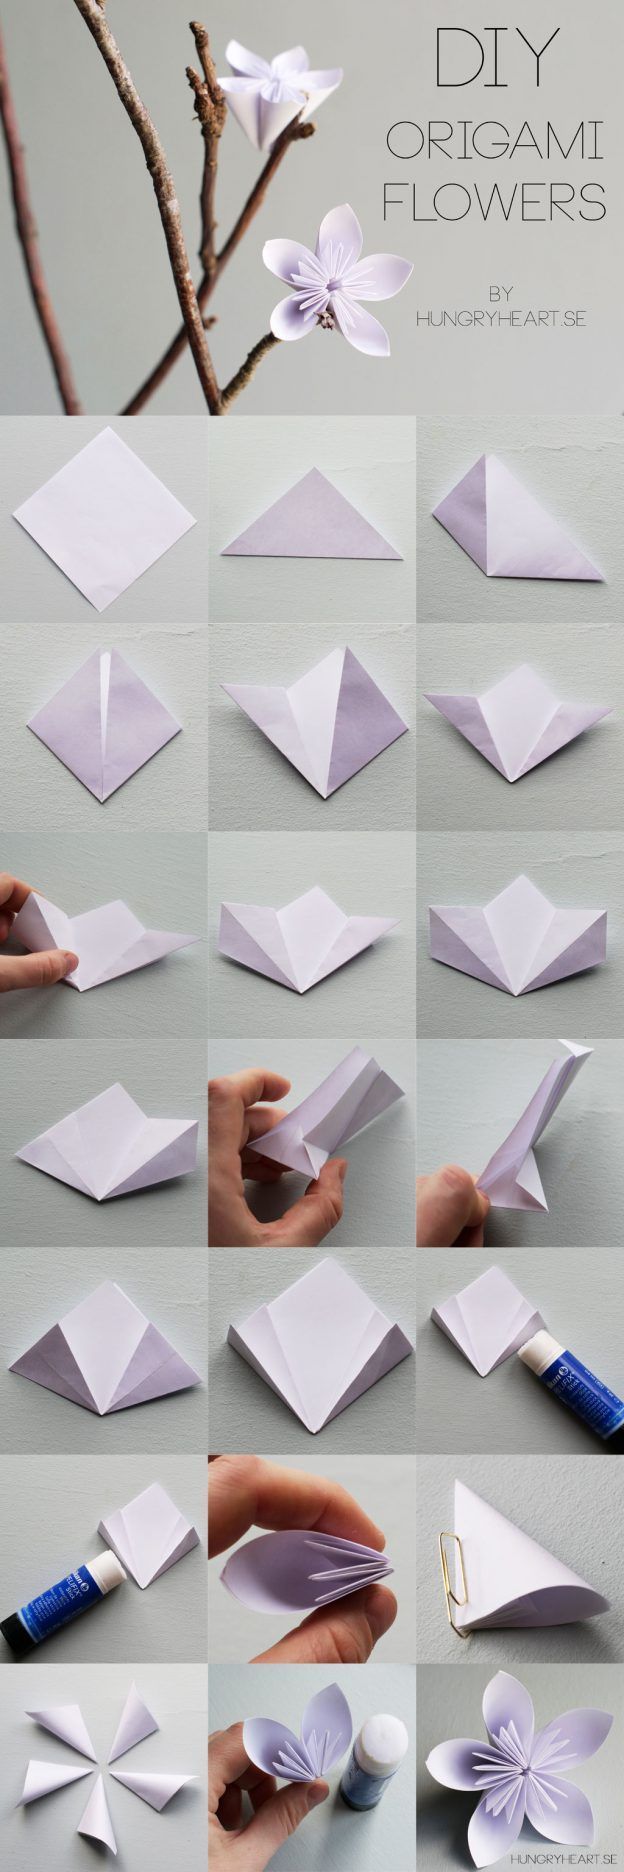 DIY Origami Flower Step-by-Step Tutorial | HungryHeart.se